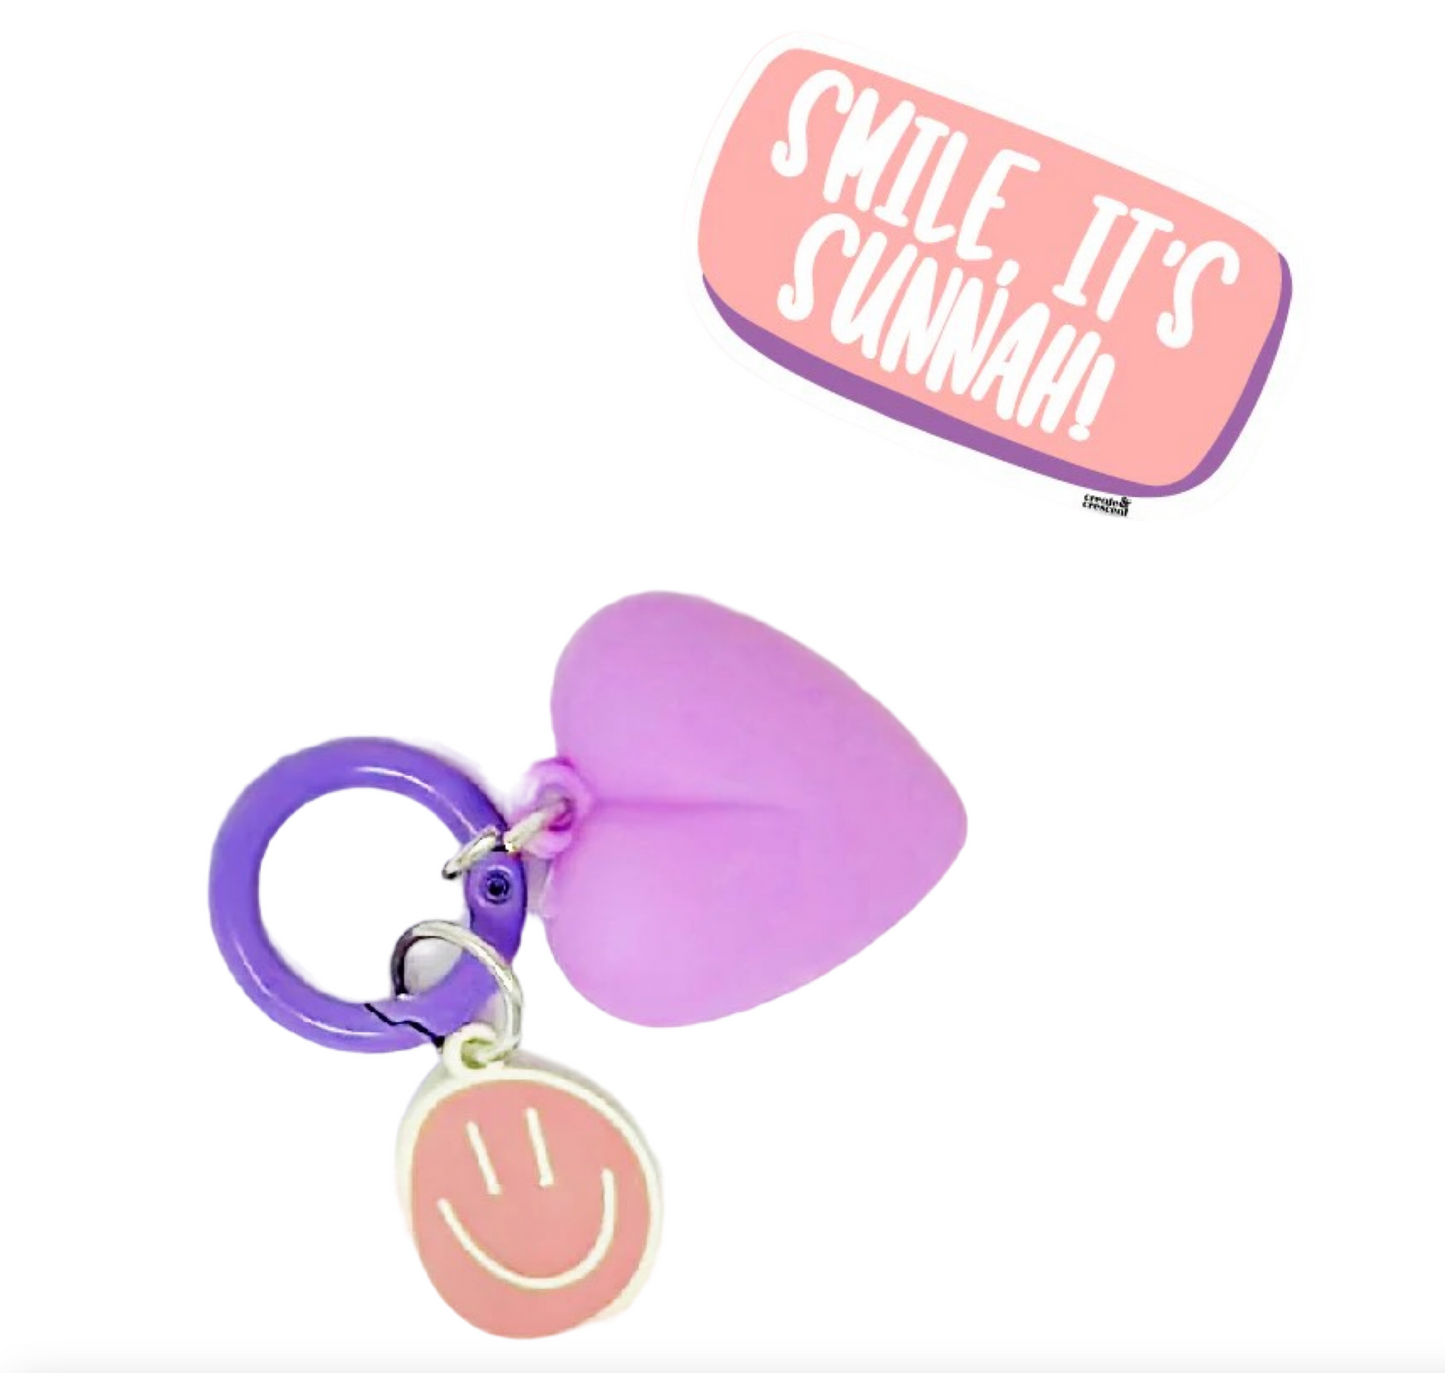 "Smile It's Sunnah" Keychain and Vinyl Sticker